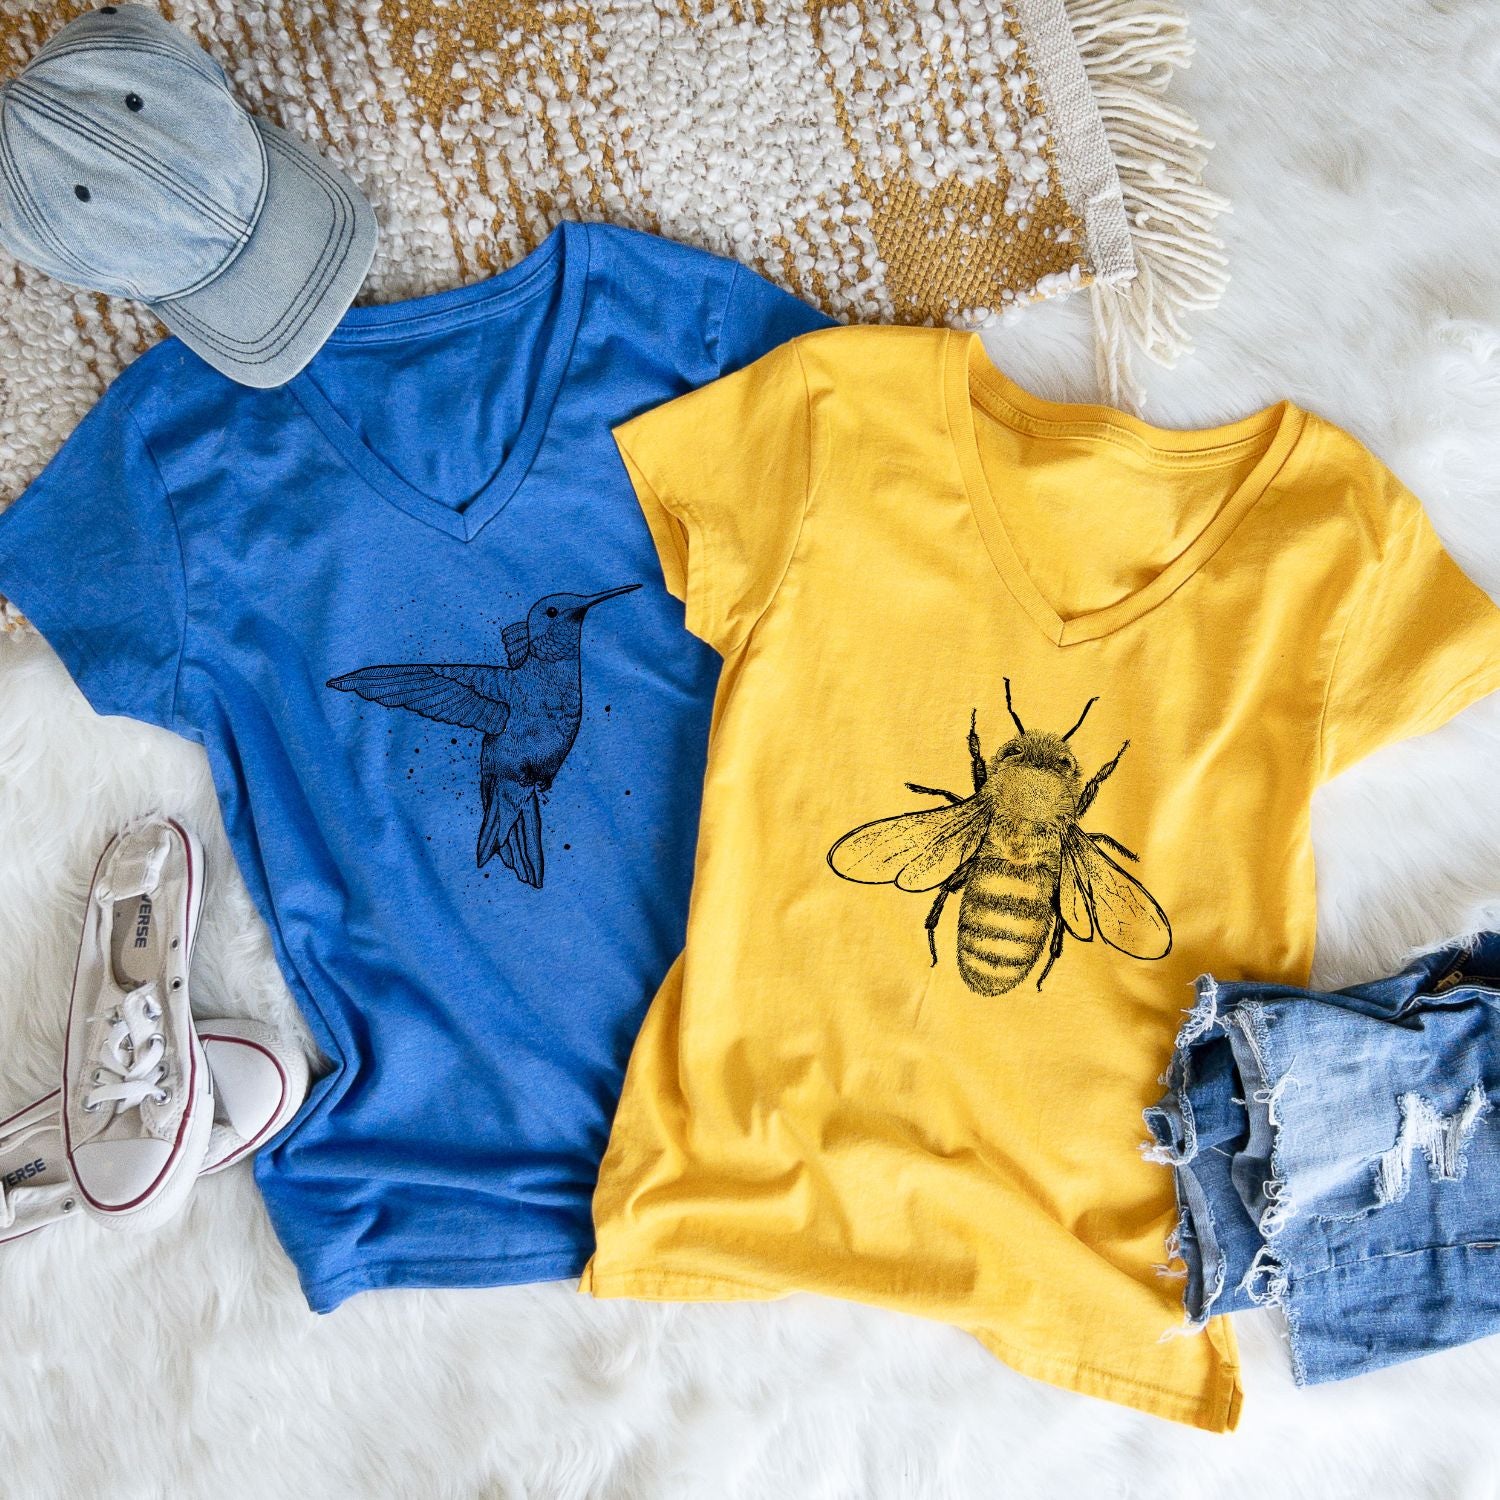 Hummingbird shirt and bee shirt